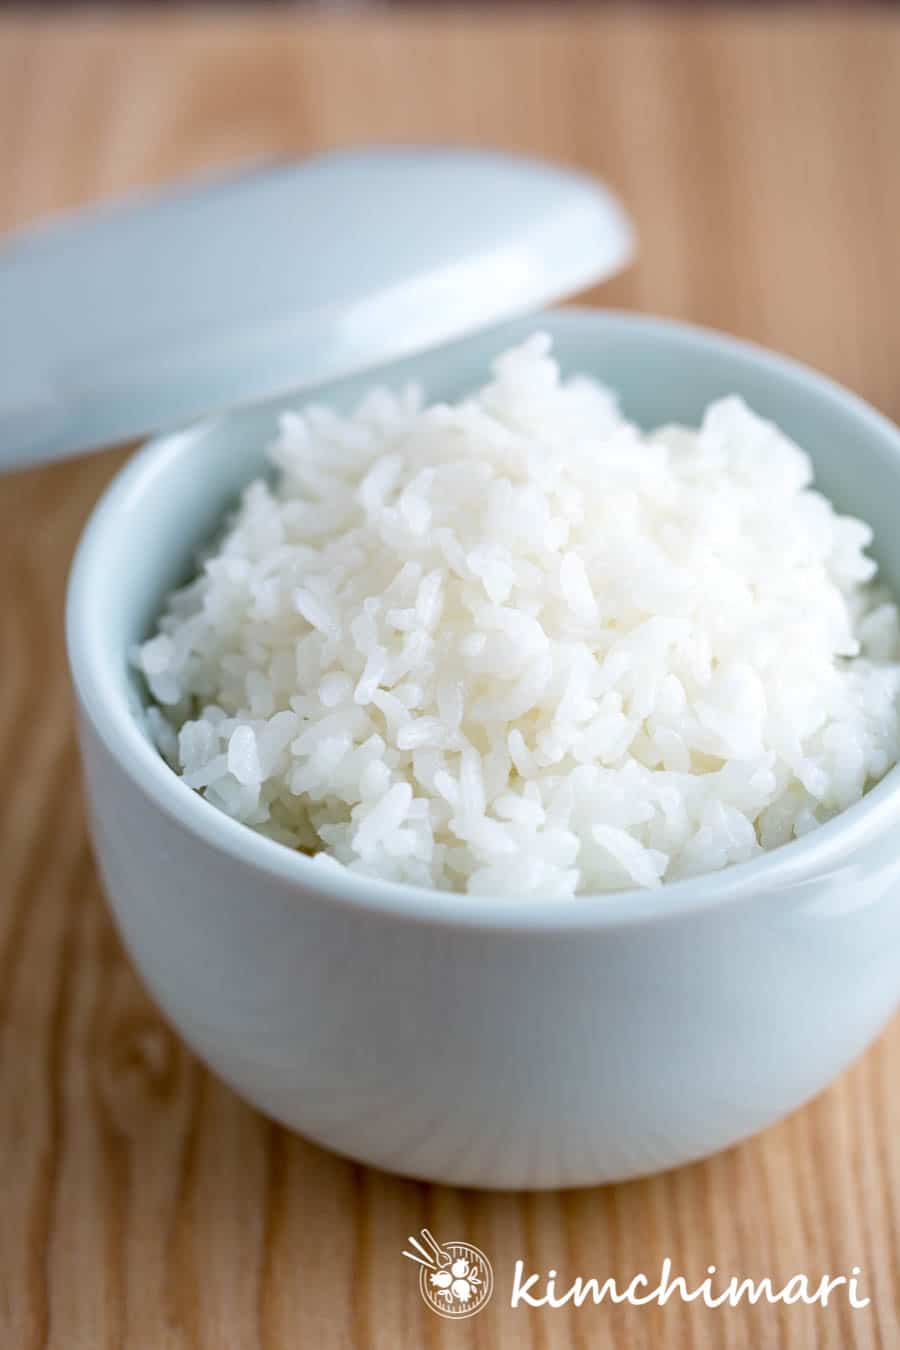 https://kimchimari.com/wp-content/uploads/2021/02/Korean-Rice-in-Blue-Ceramic-Bowl-with-lid.jpg